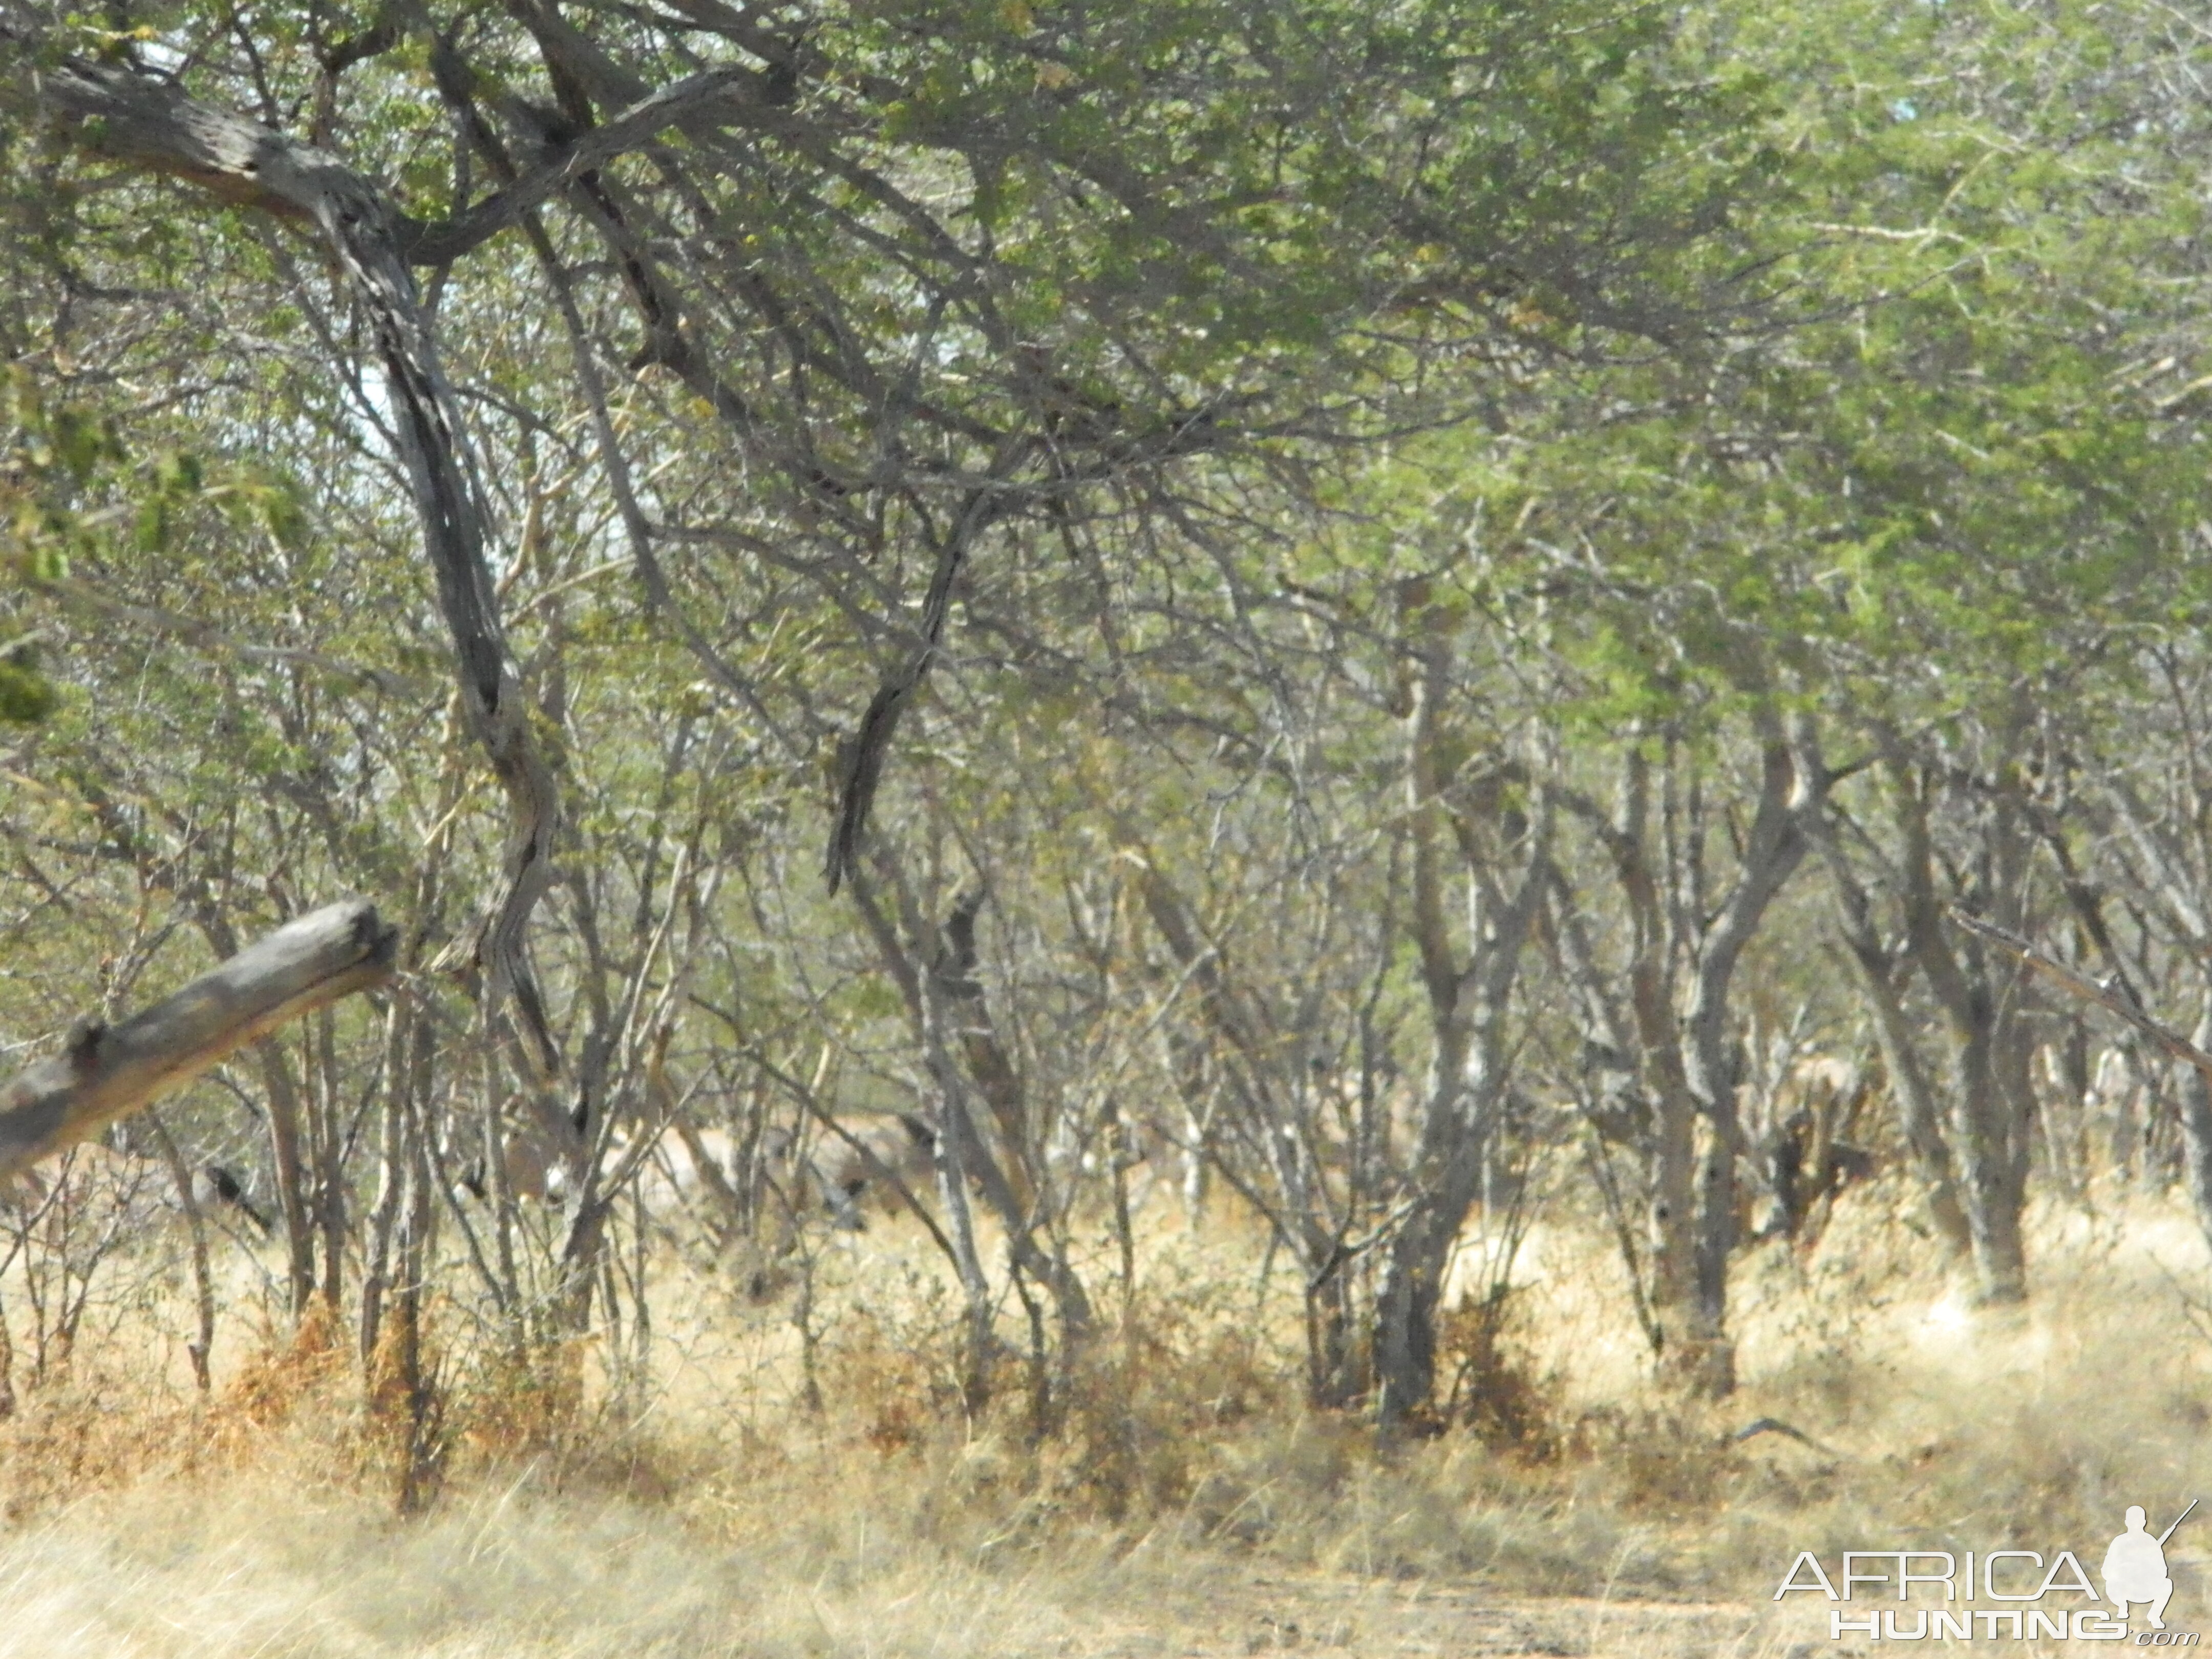 Gemsbok in the bush